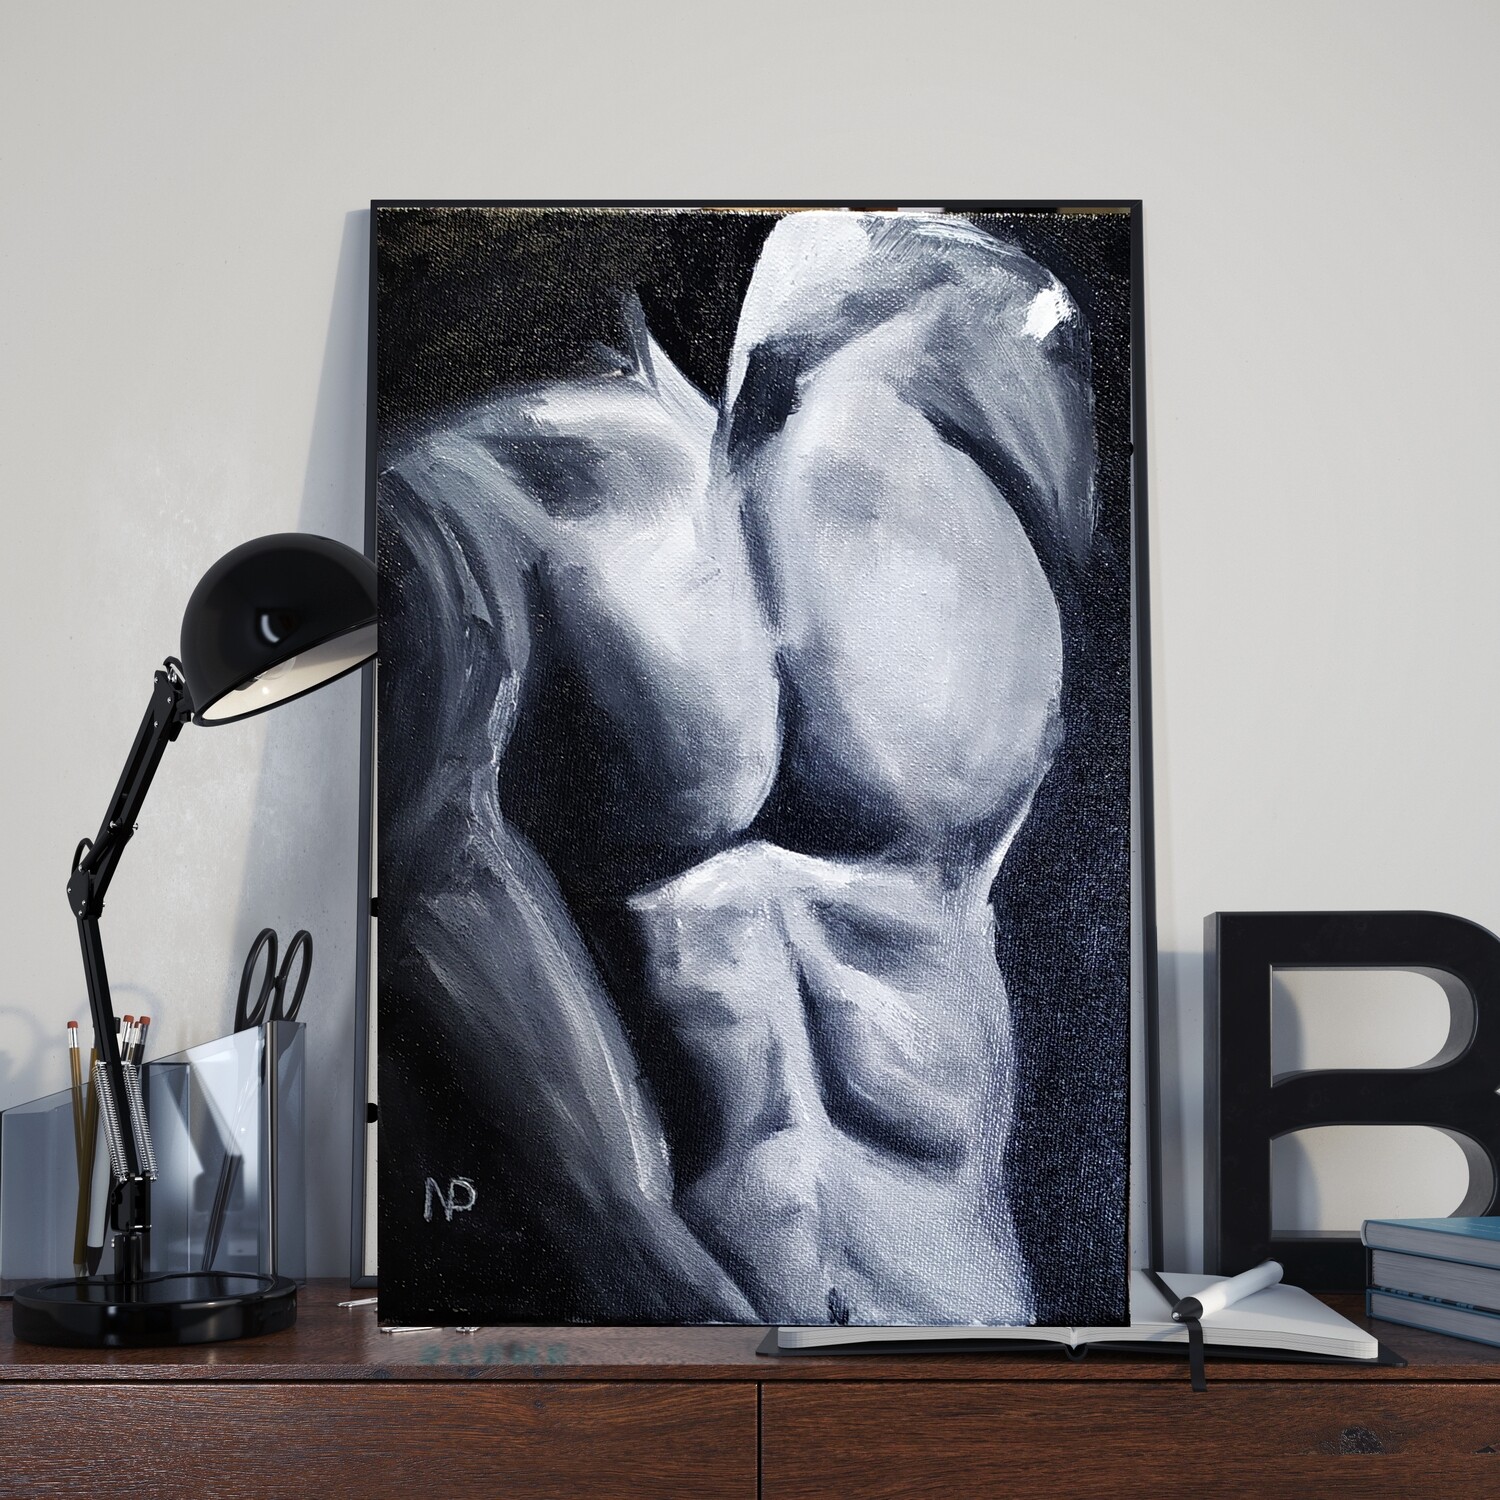 Black man white woman nude paintings